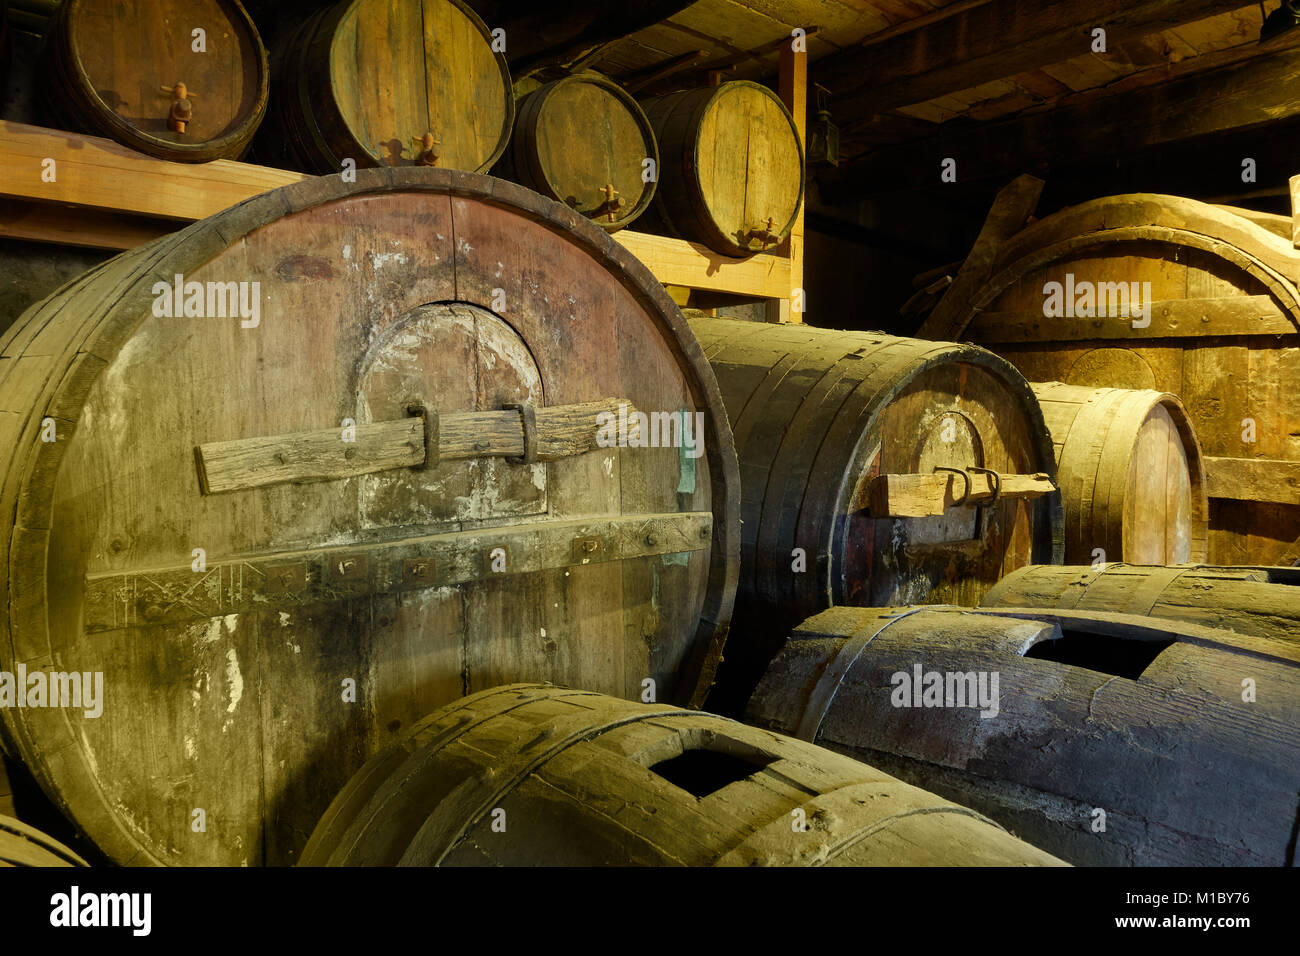 Old wine barrels in cellar Stock Photo